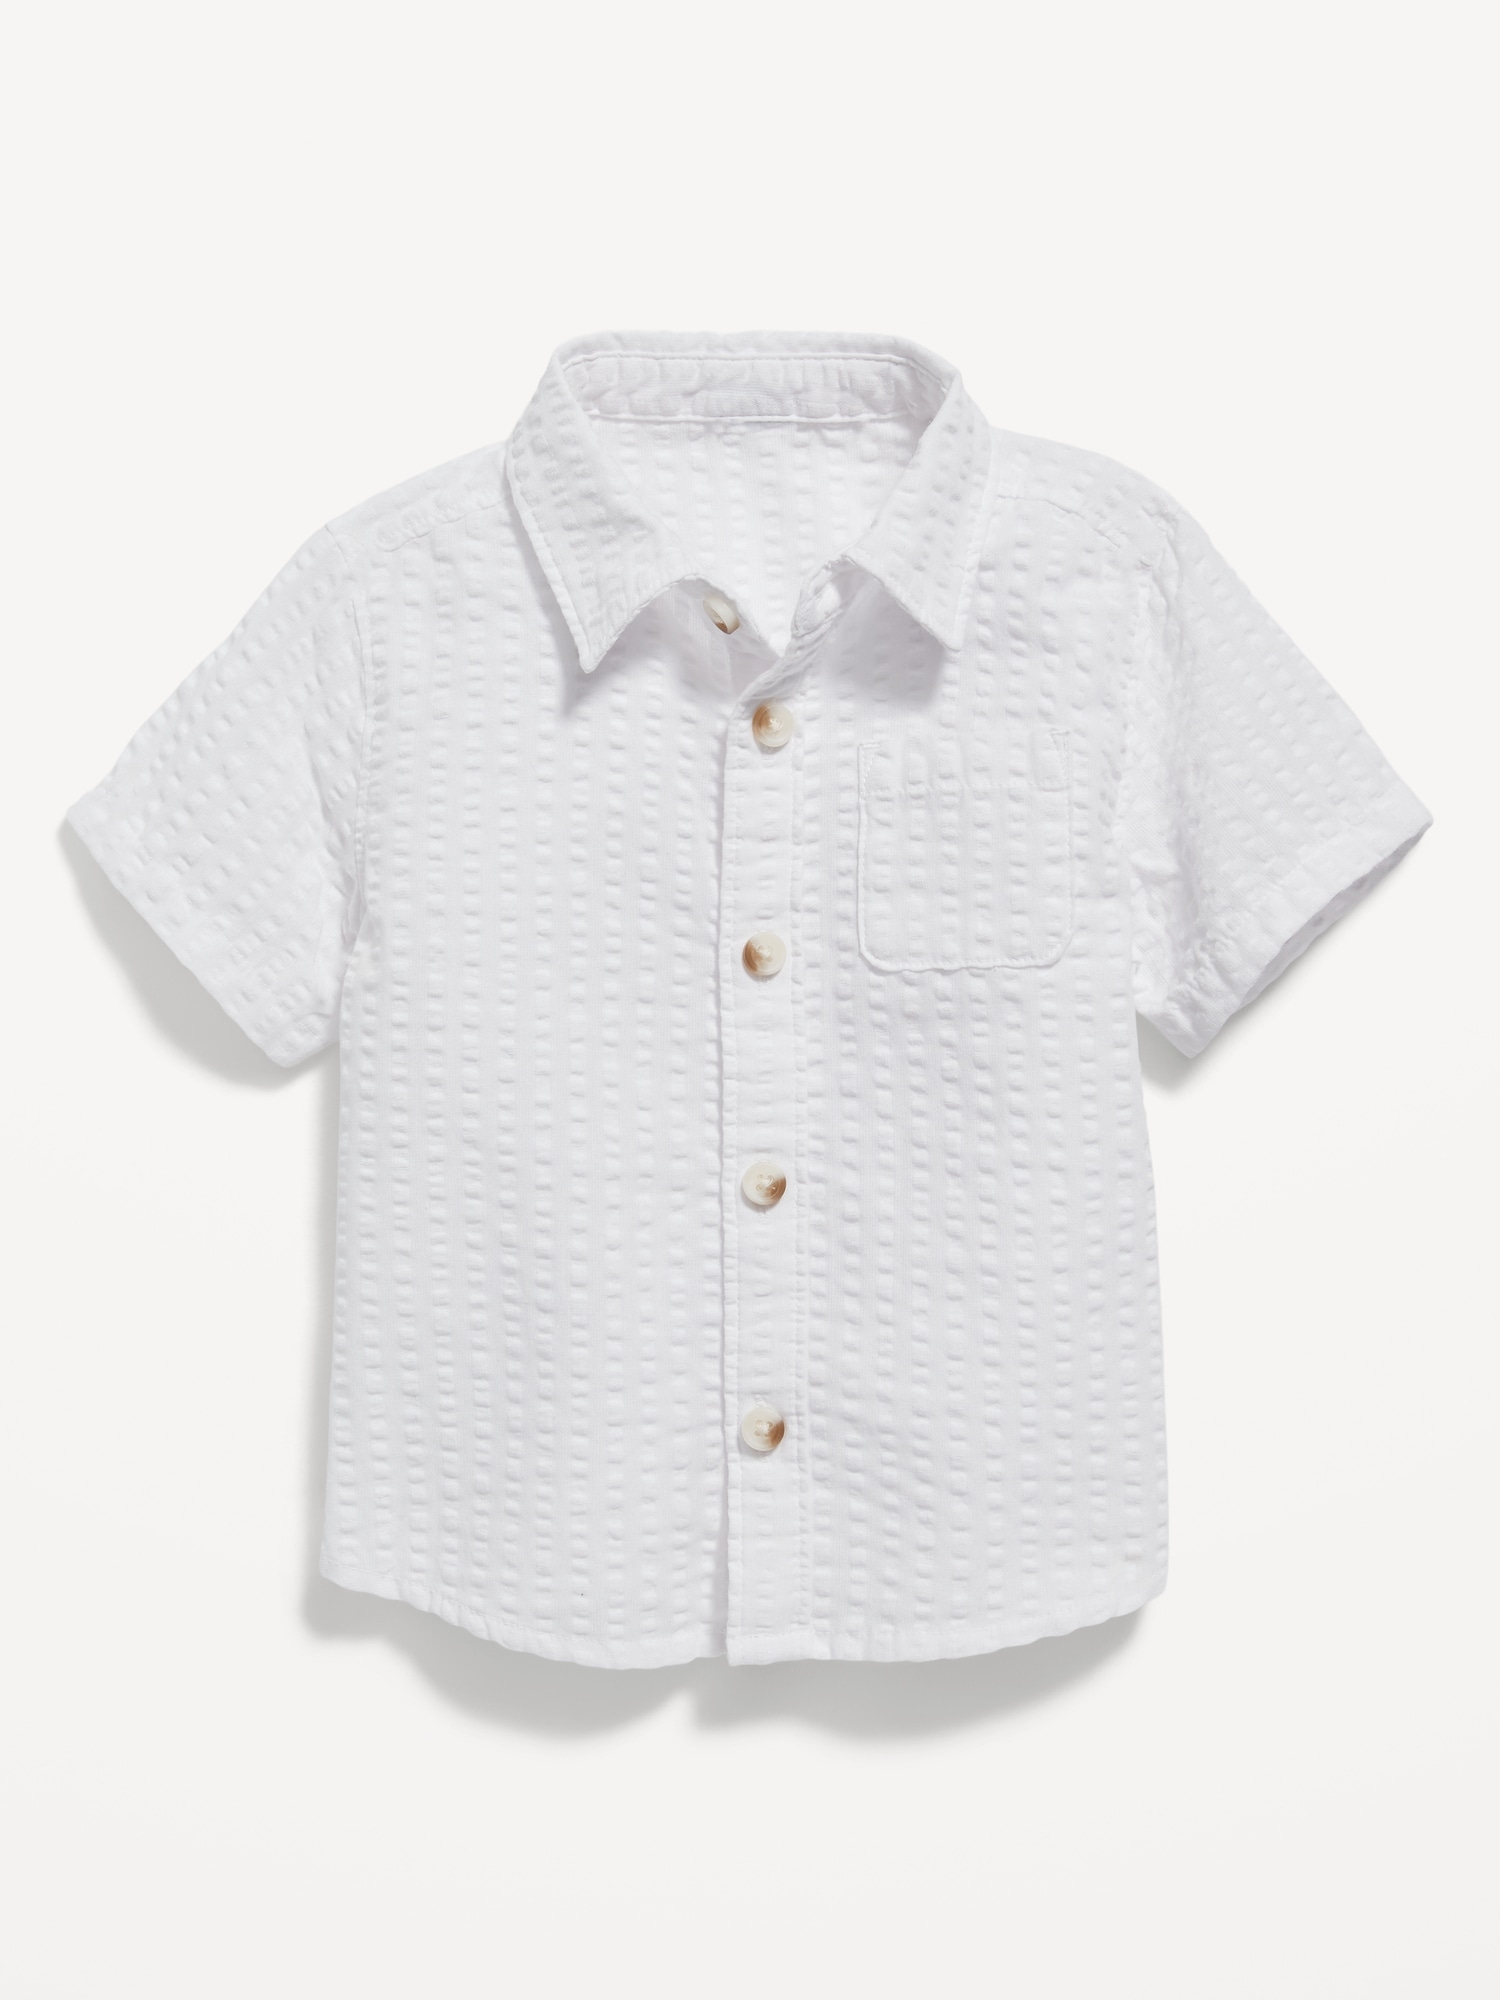 Old Navy Short-Sleeve Textured-Seersucker Camp Shirt for Baby white. 1